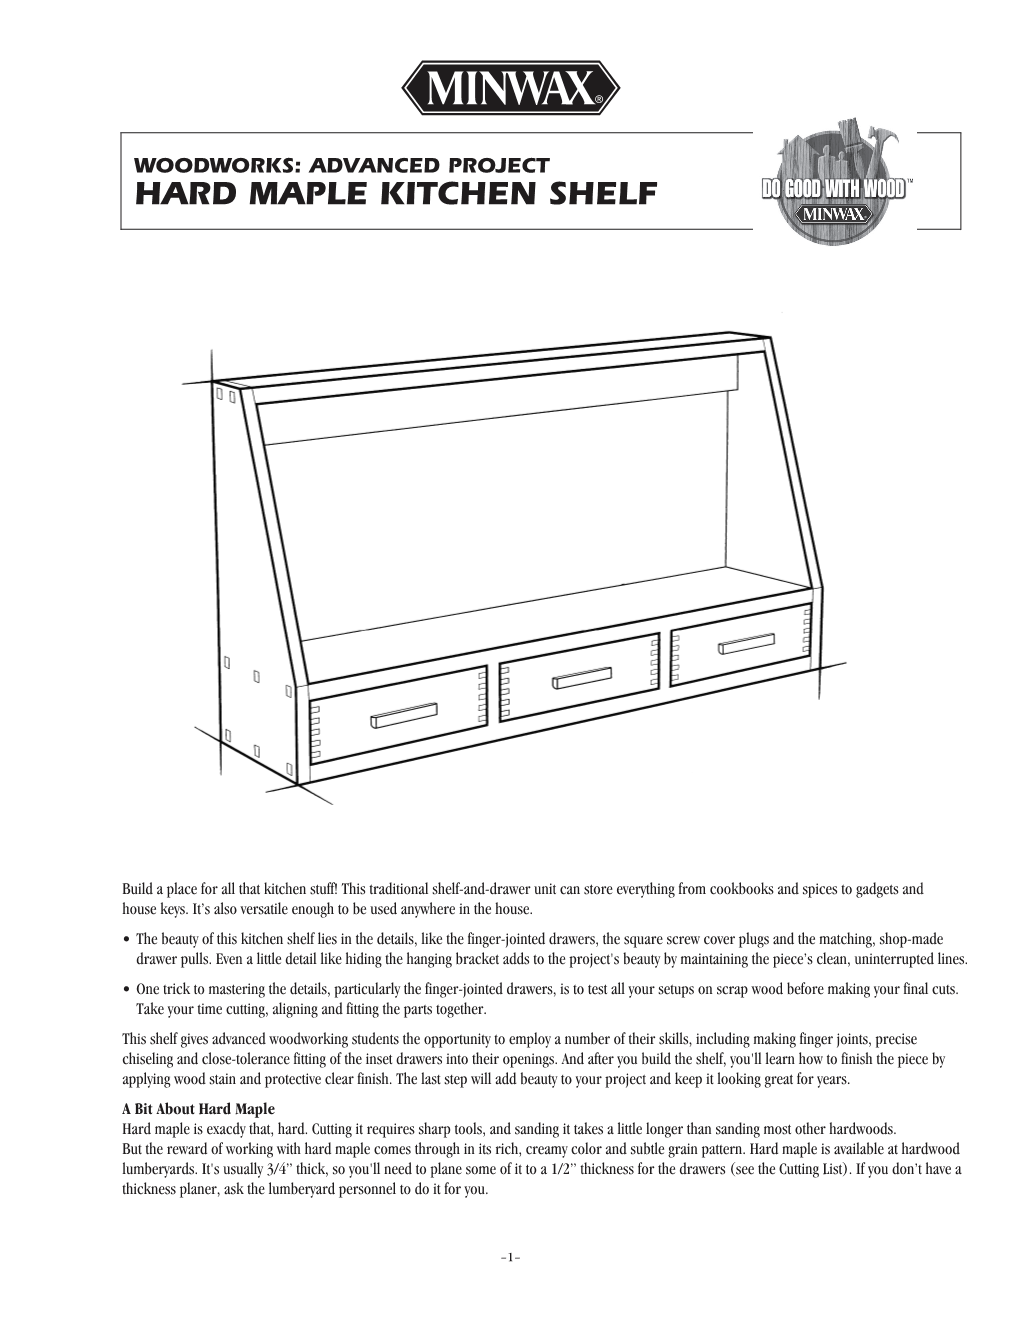 Hard Maple Kitchen Shelf